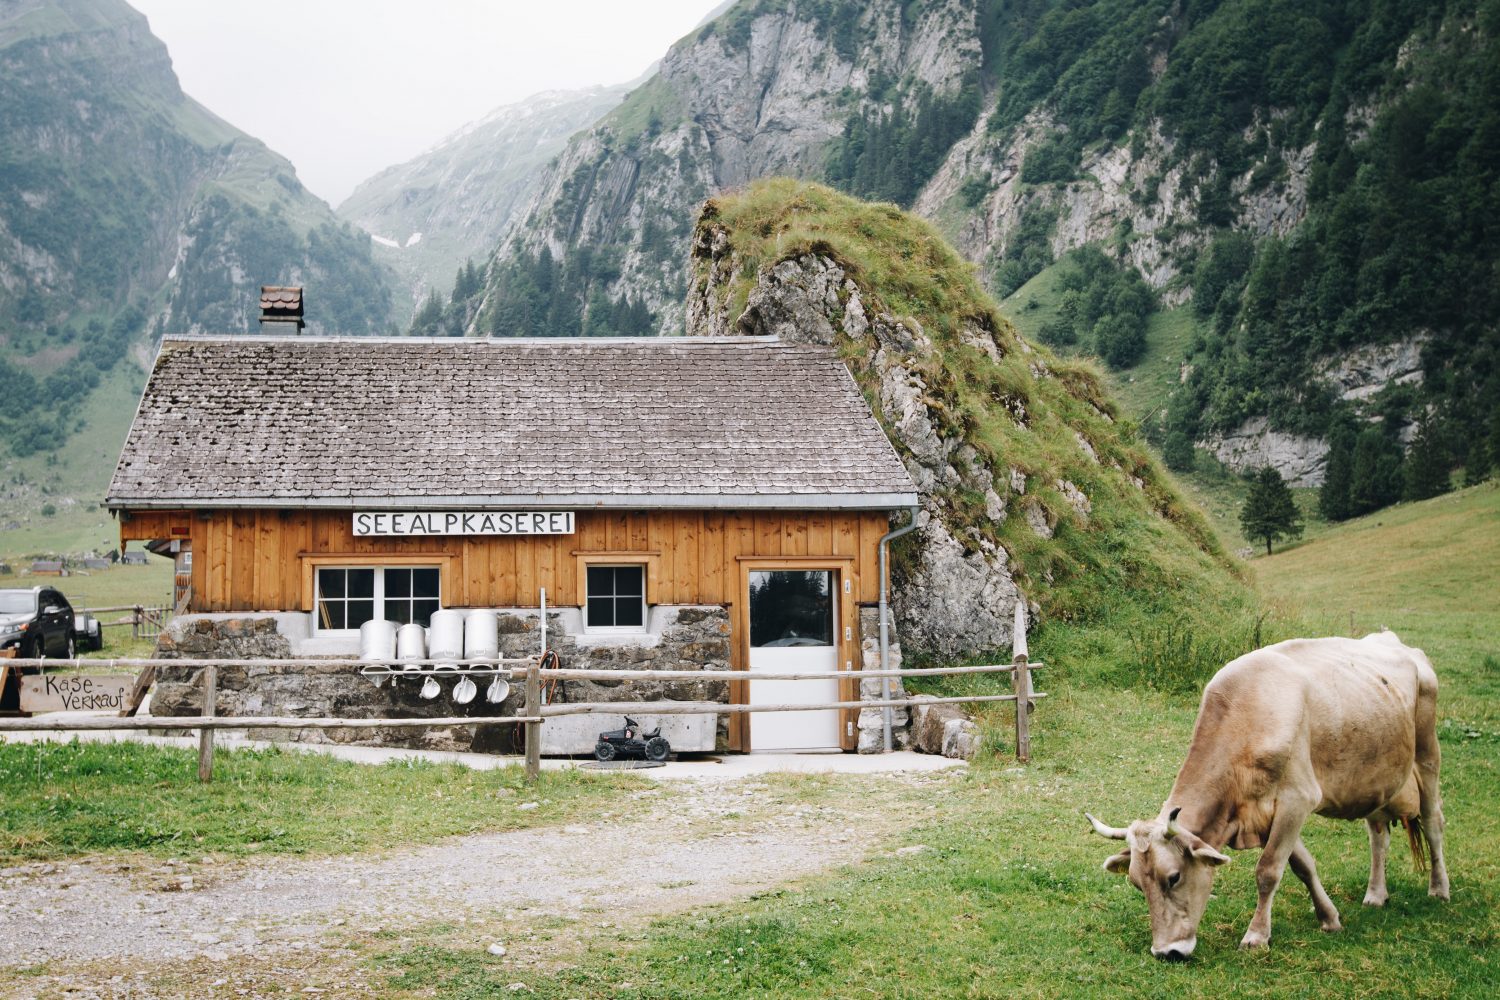 Peaceful scenery in Switzerland